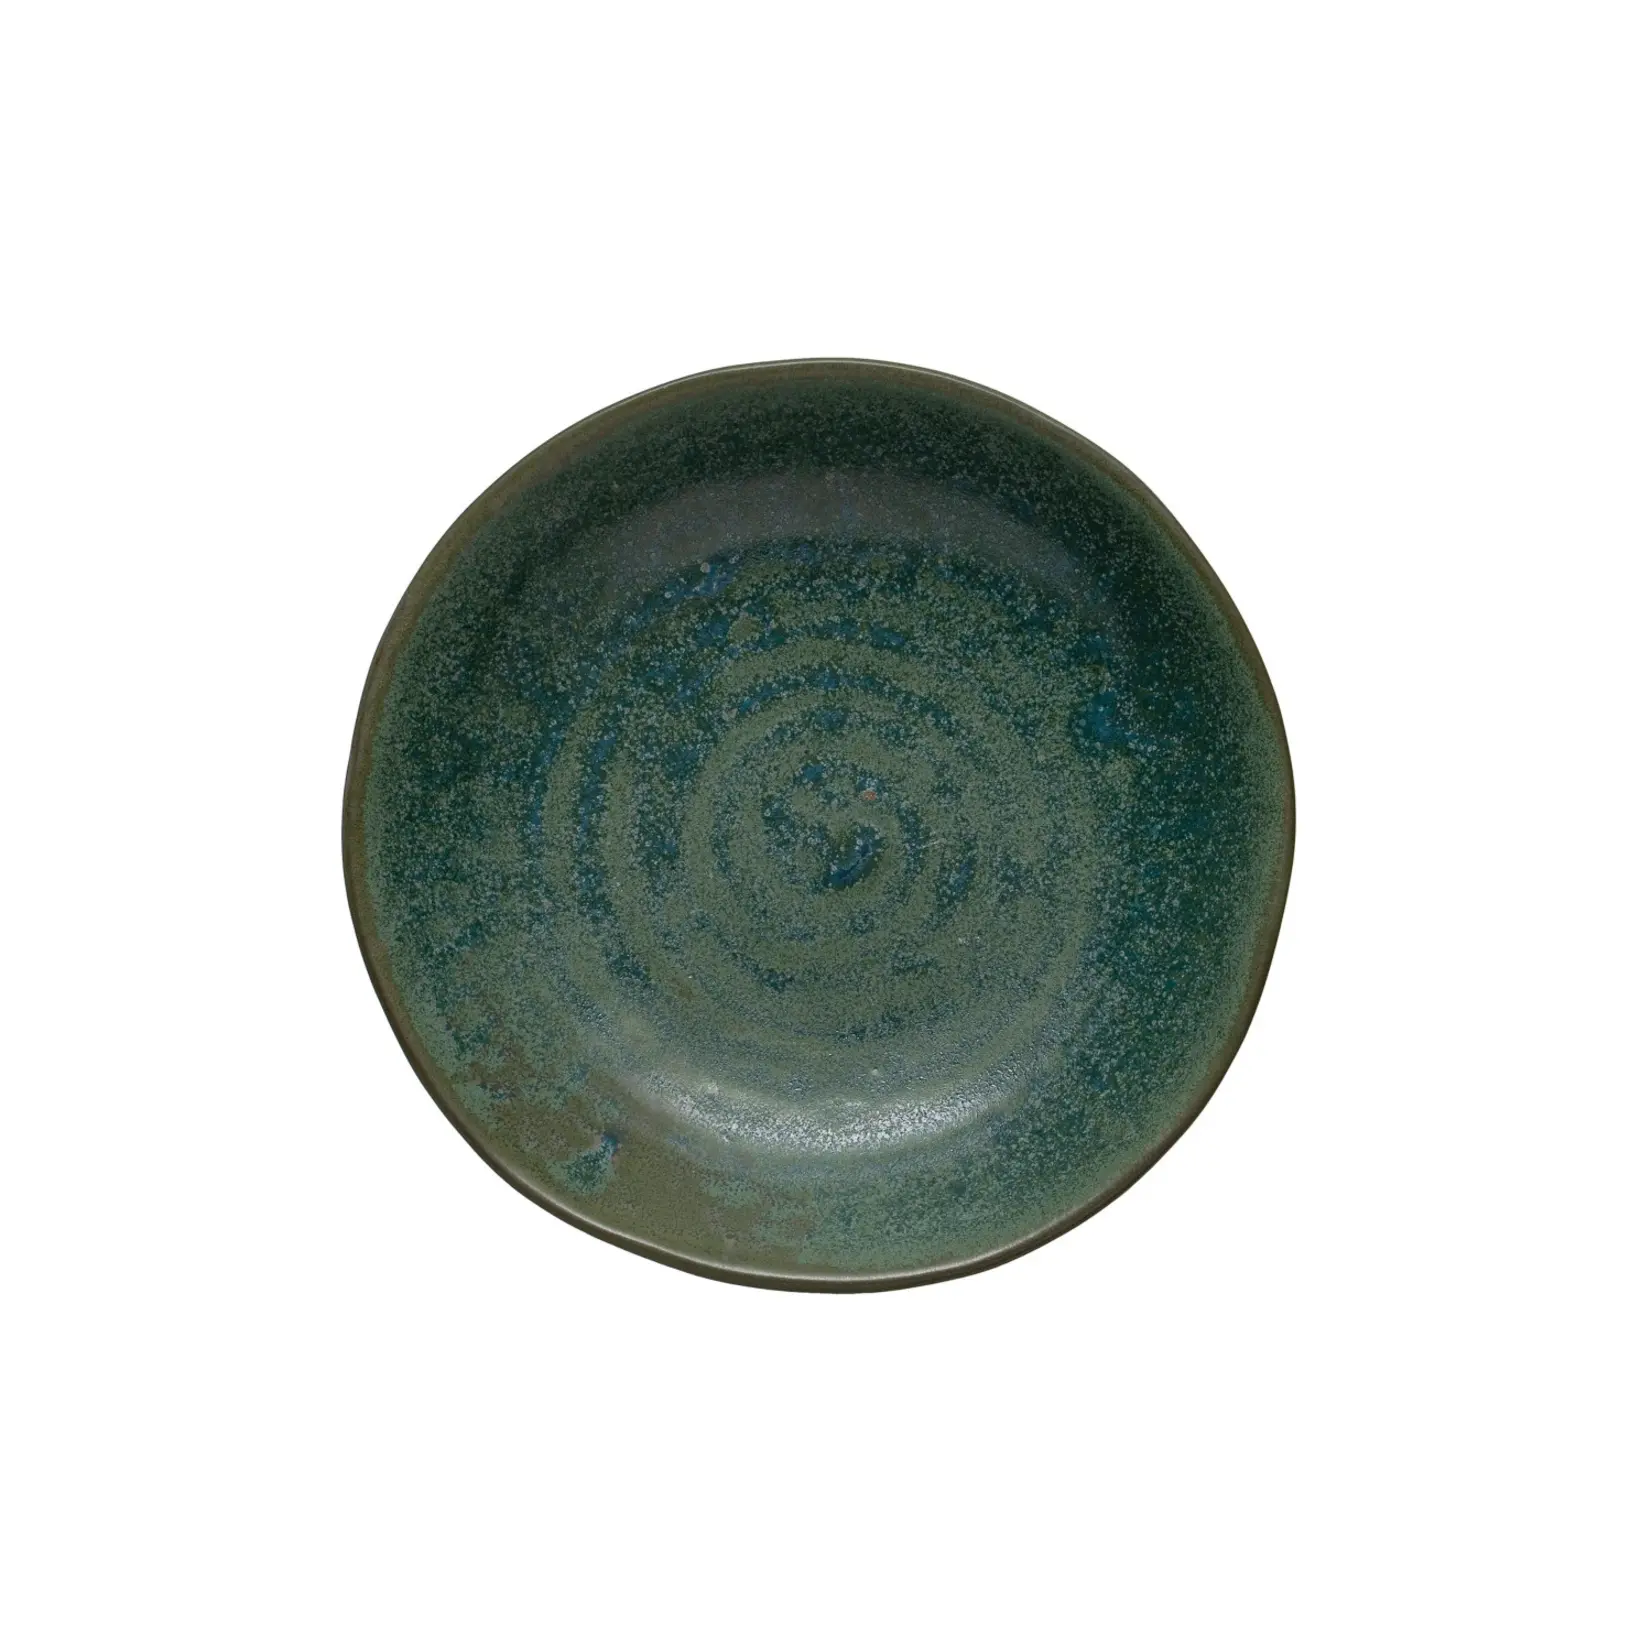 Creative Coop Reactive Glaze Stoneware Serving Bowl, 7"